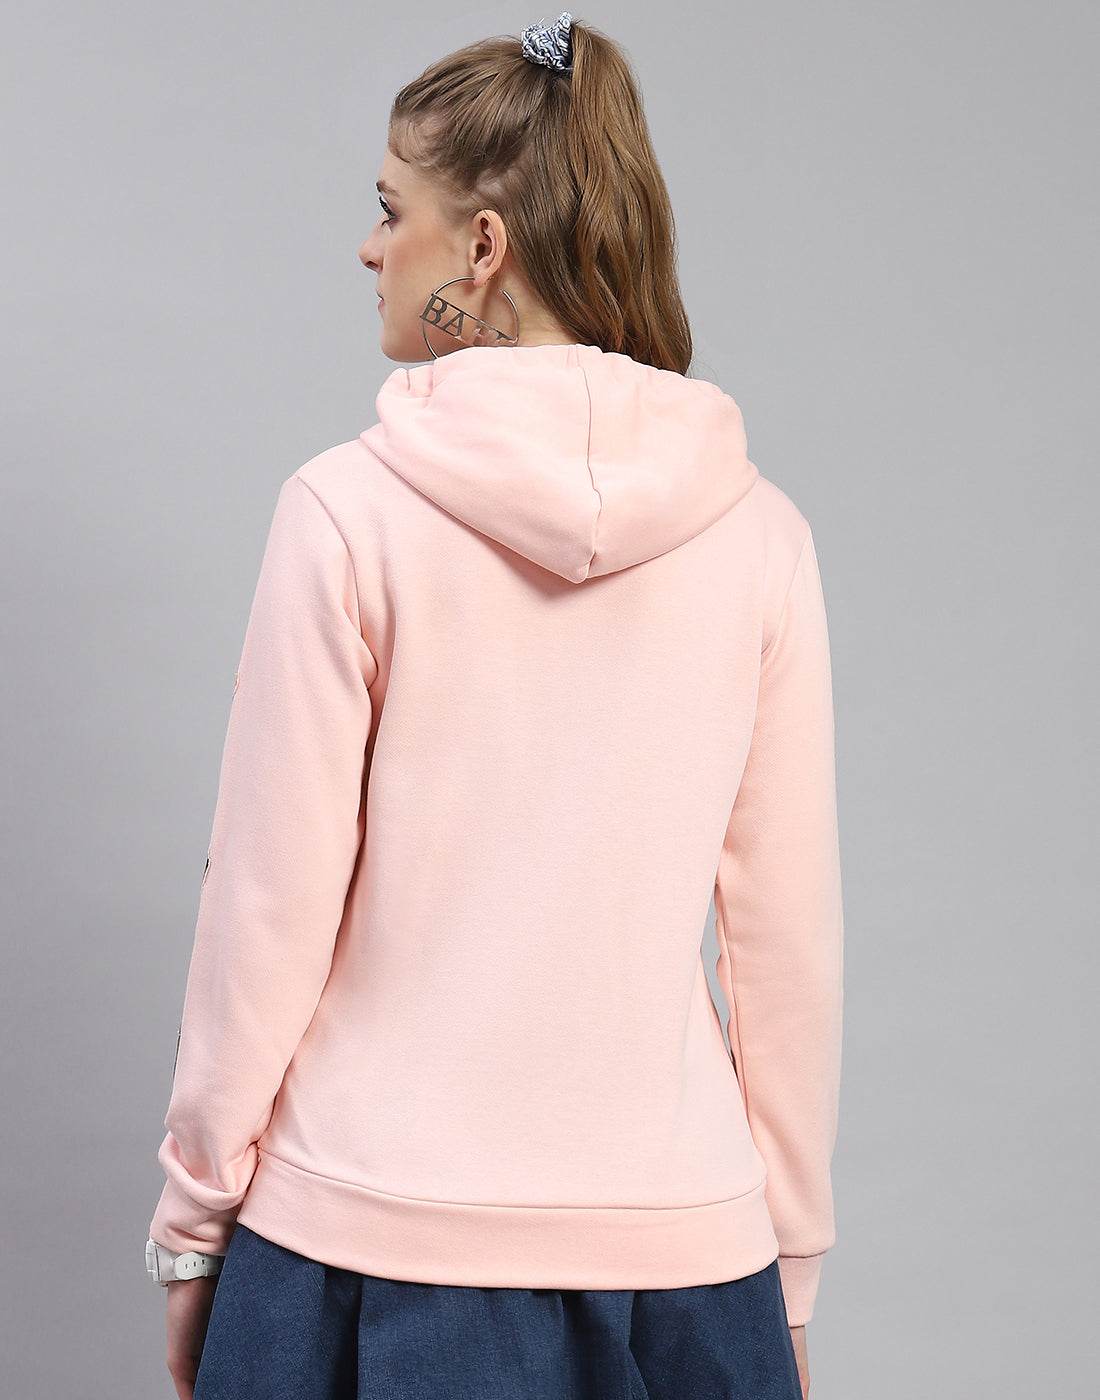 Women Pink Embroidered Hooded Full Sleeve Sweatshirt